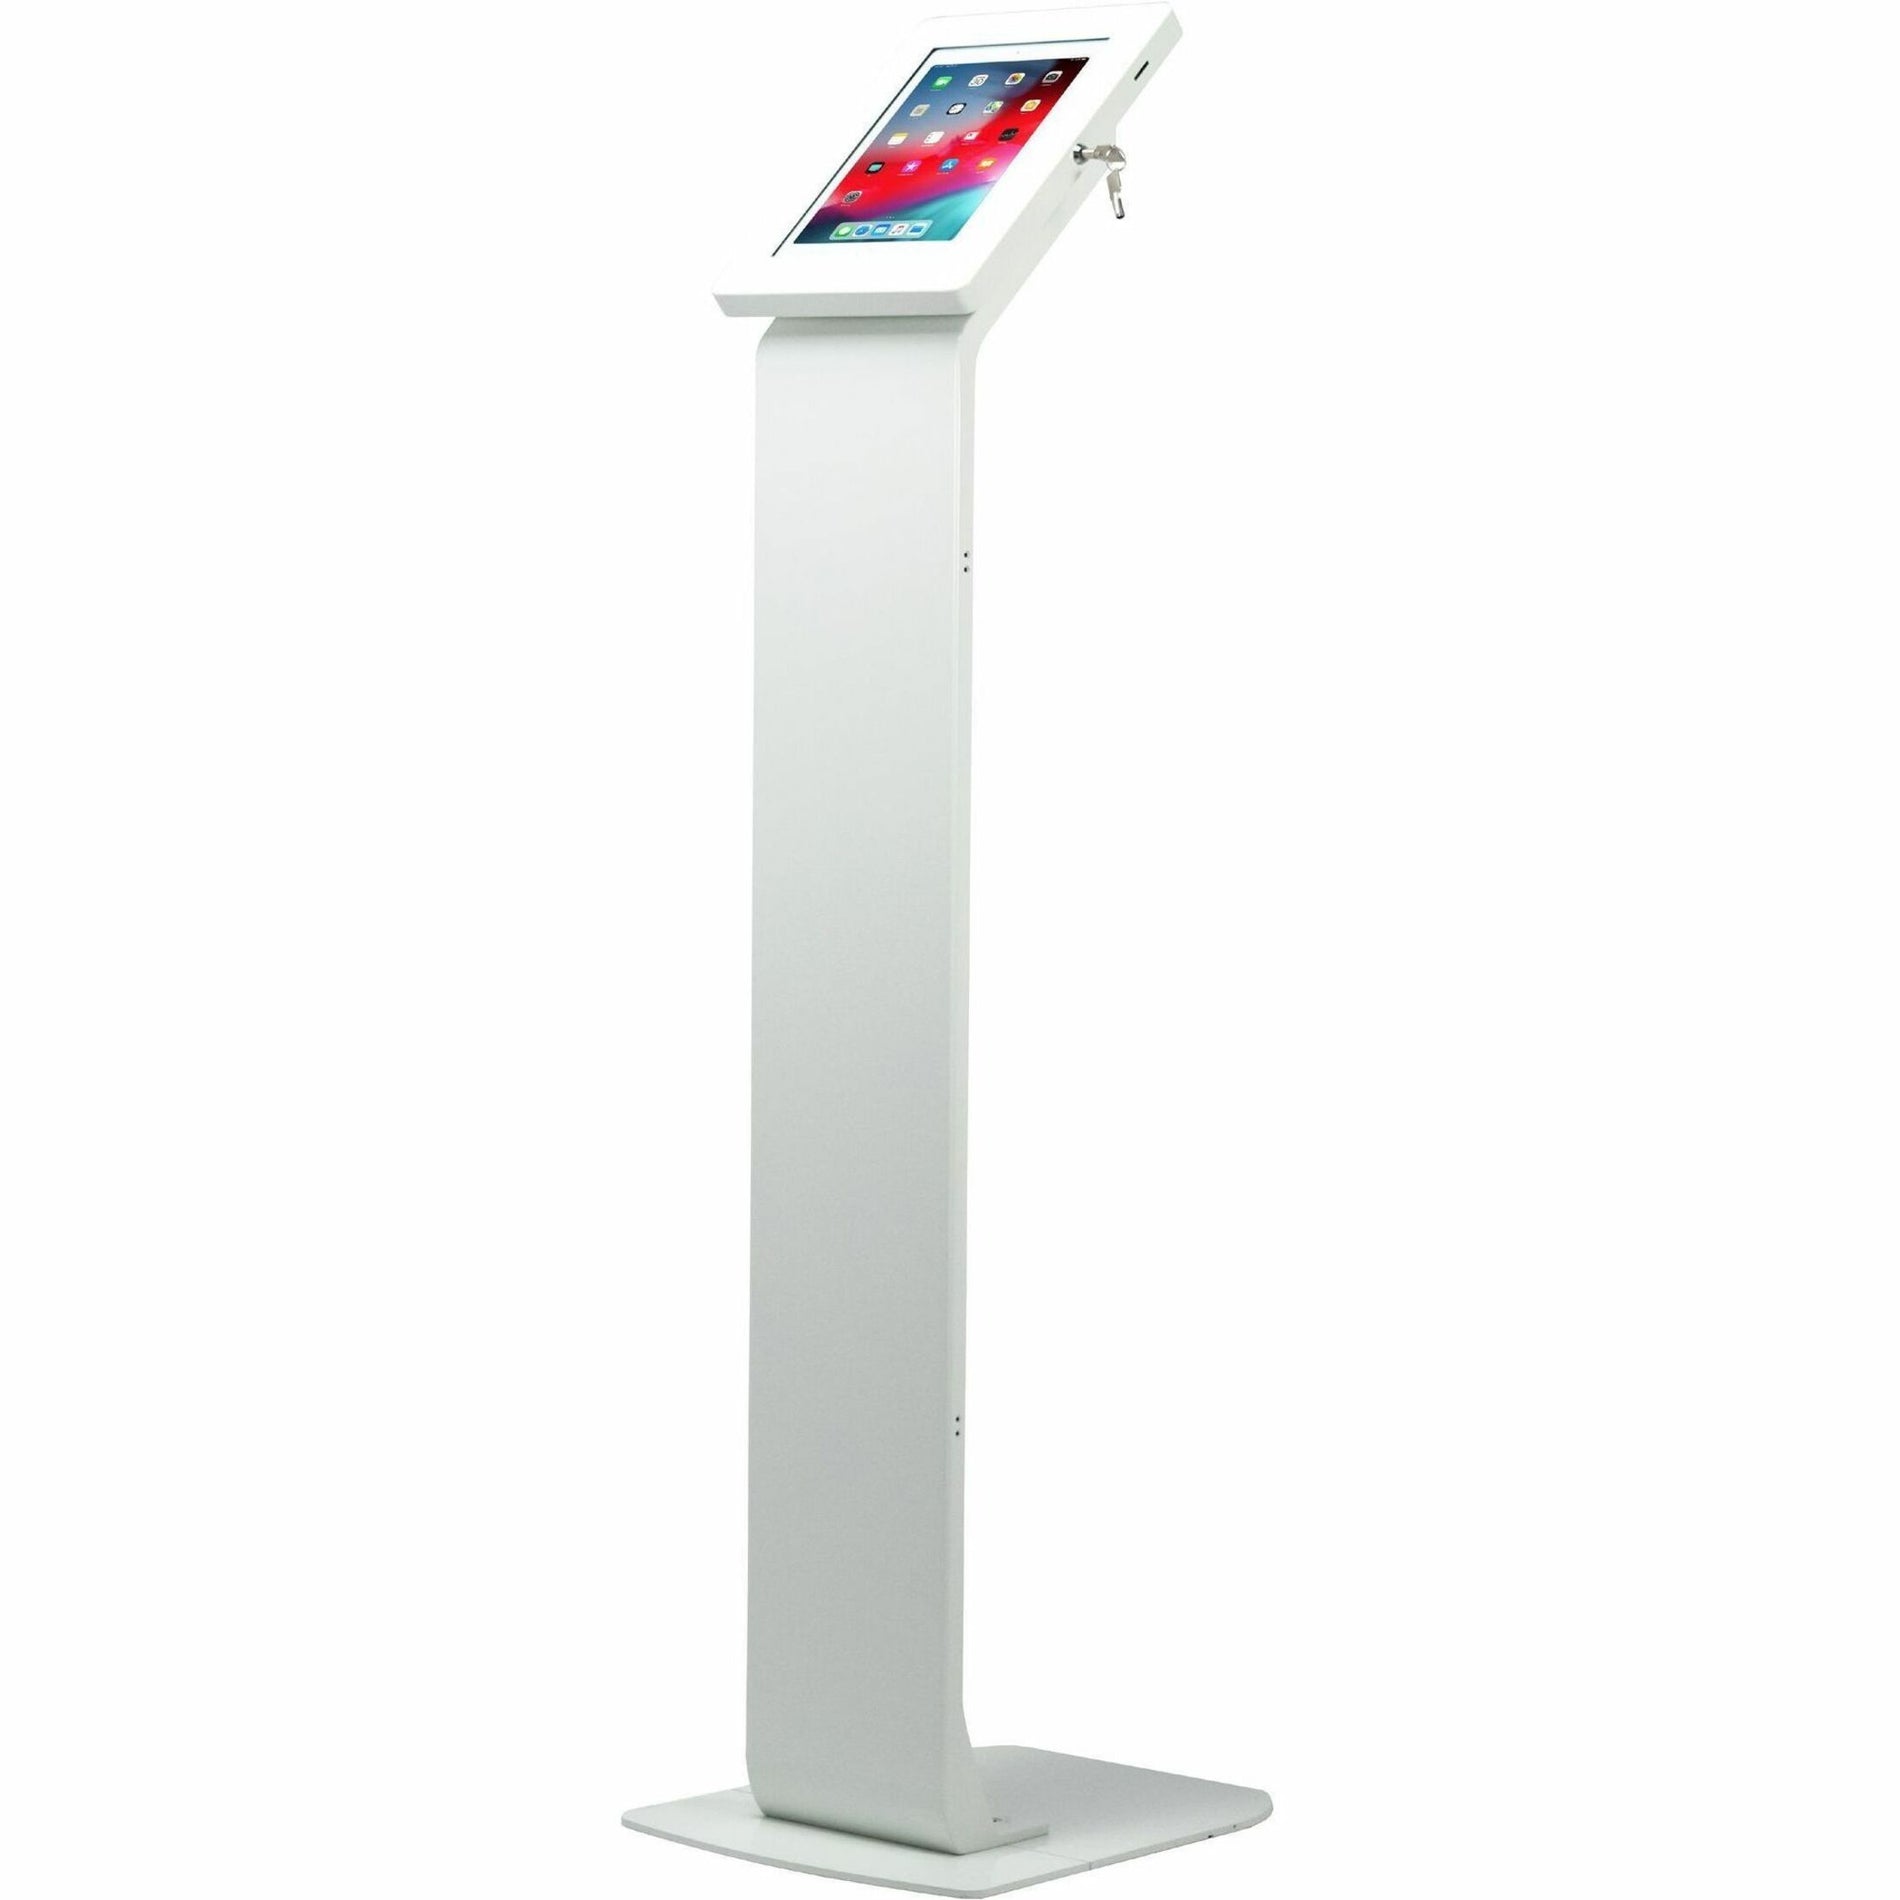 CTA Digital PAD-PLSW Premium Large Locking Floor Stand Kiosk (White), Cable Management, Non-slip, Anti-theft, 360° Rotation